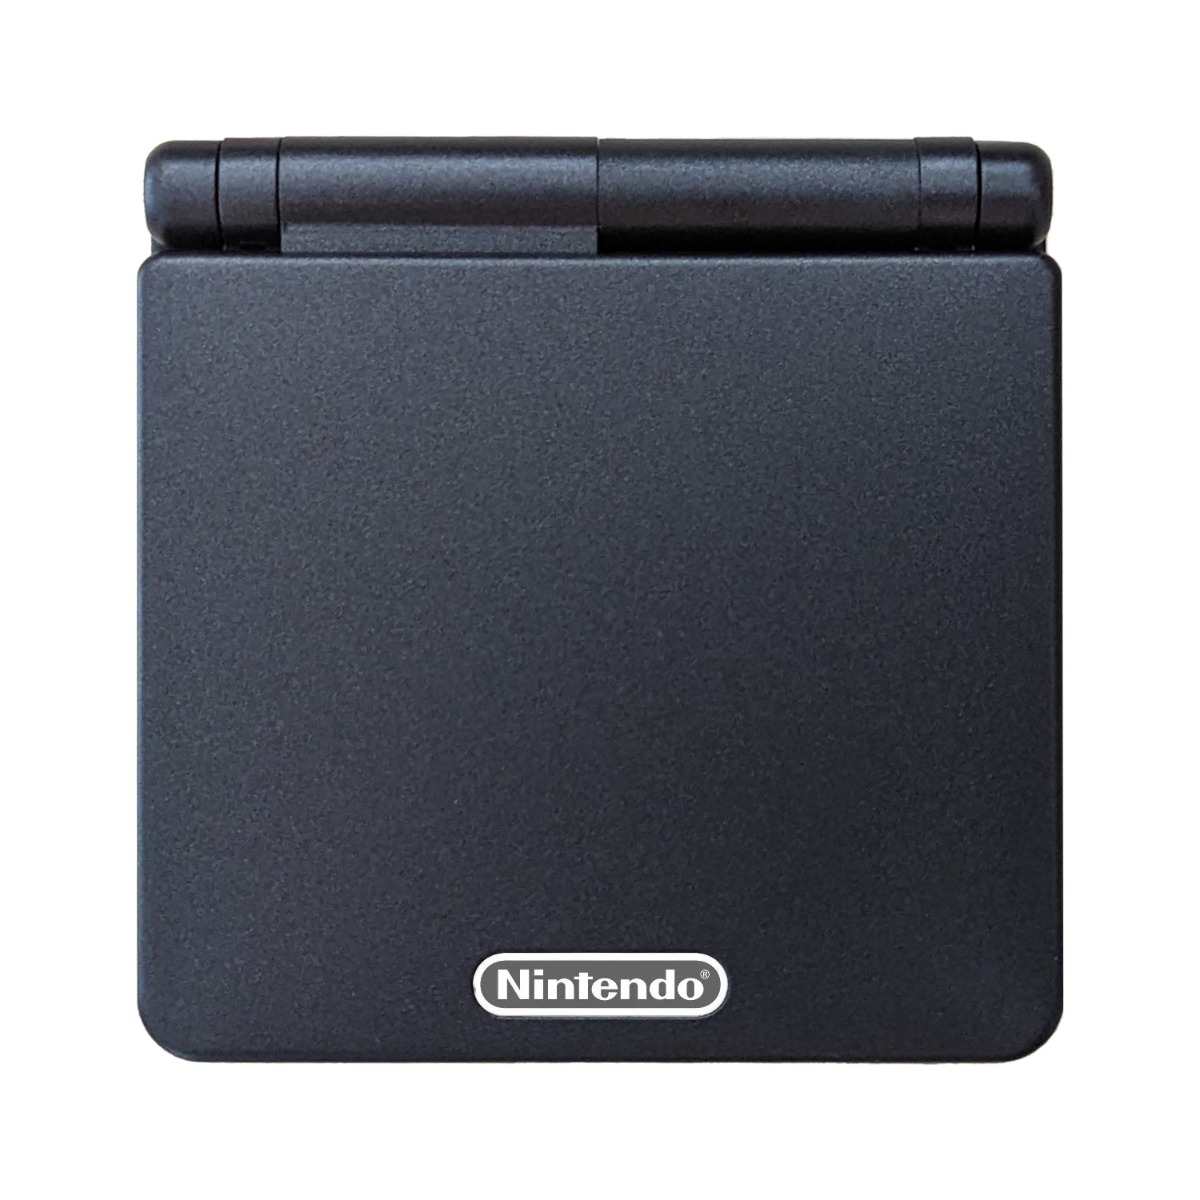 Game Boy Advance SP Shell (Black)